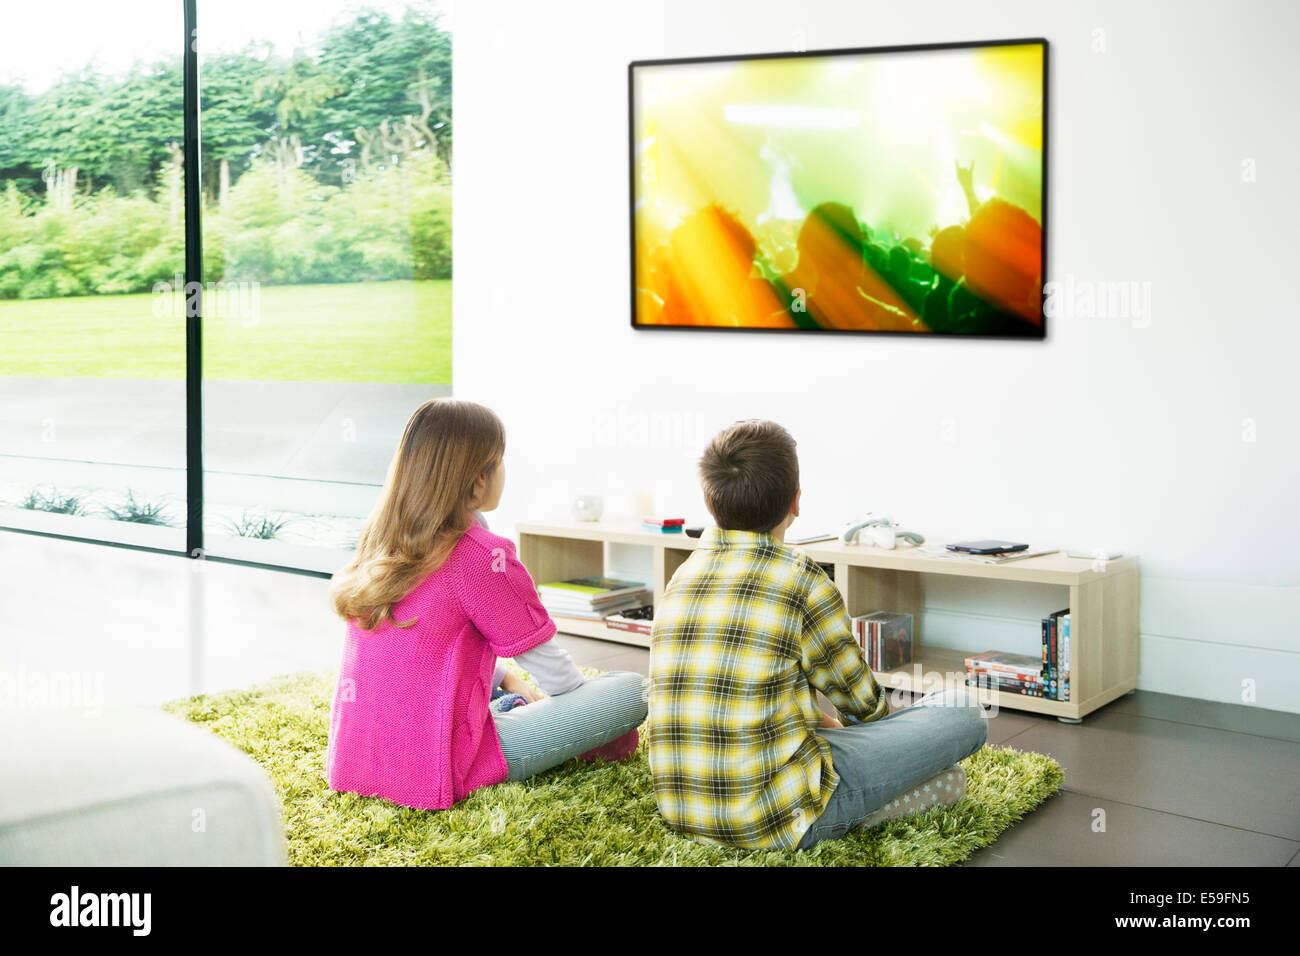 Kids Watching Tv In Living Room